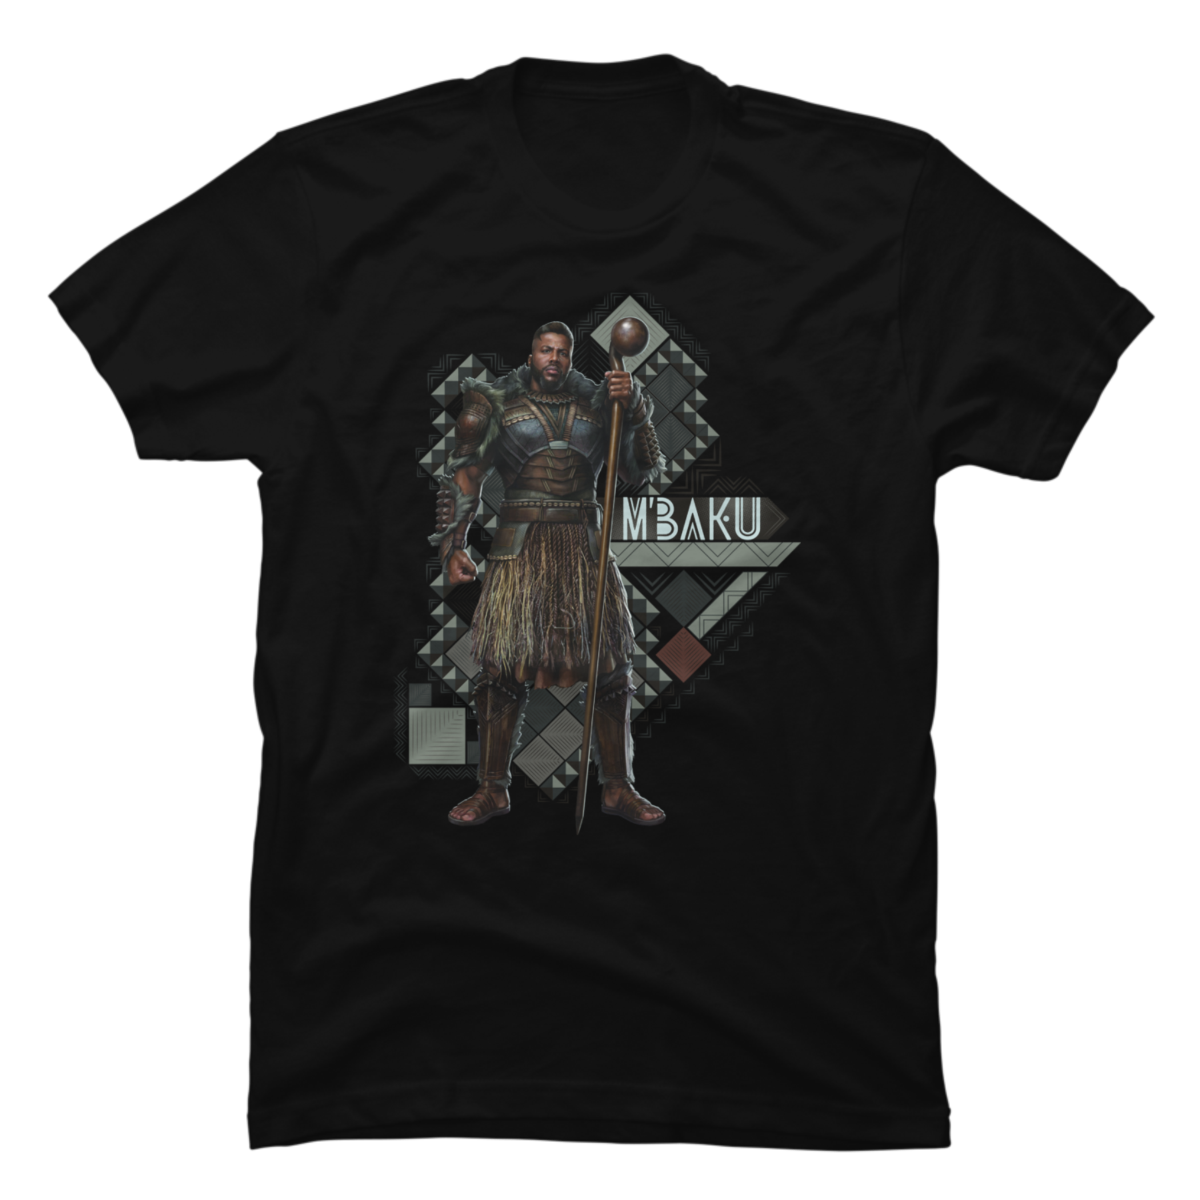 Wakanda Forever M'Baku Stance Pattern - Buy t-shirt designs